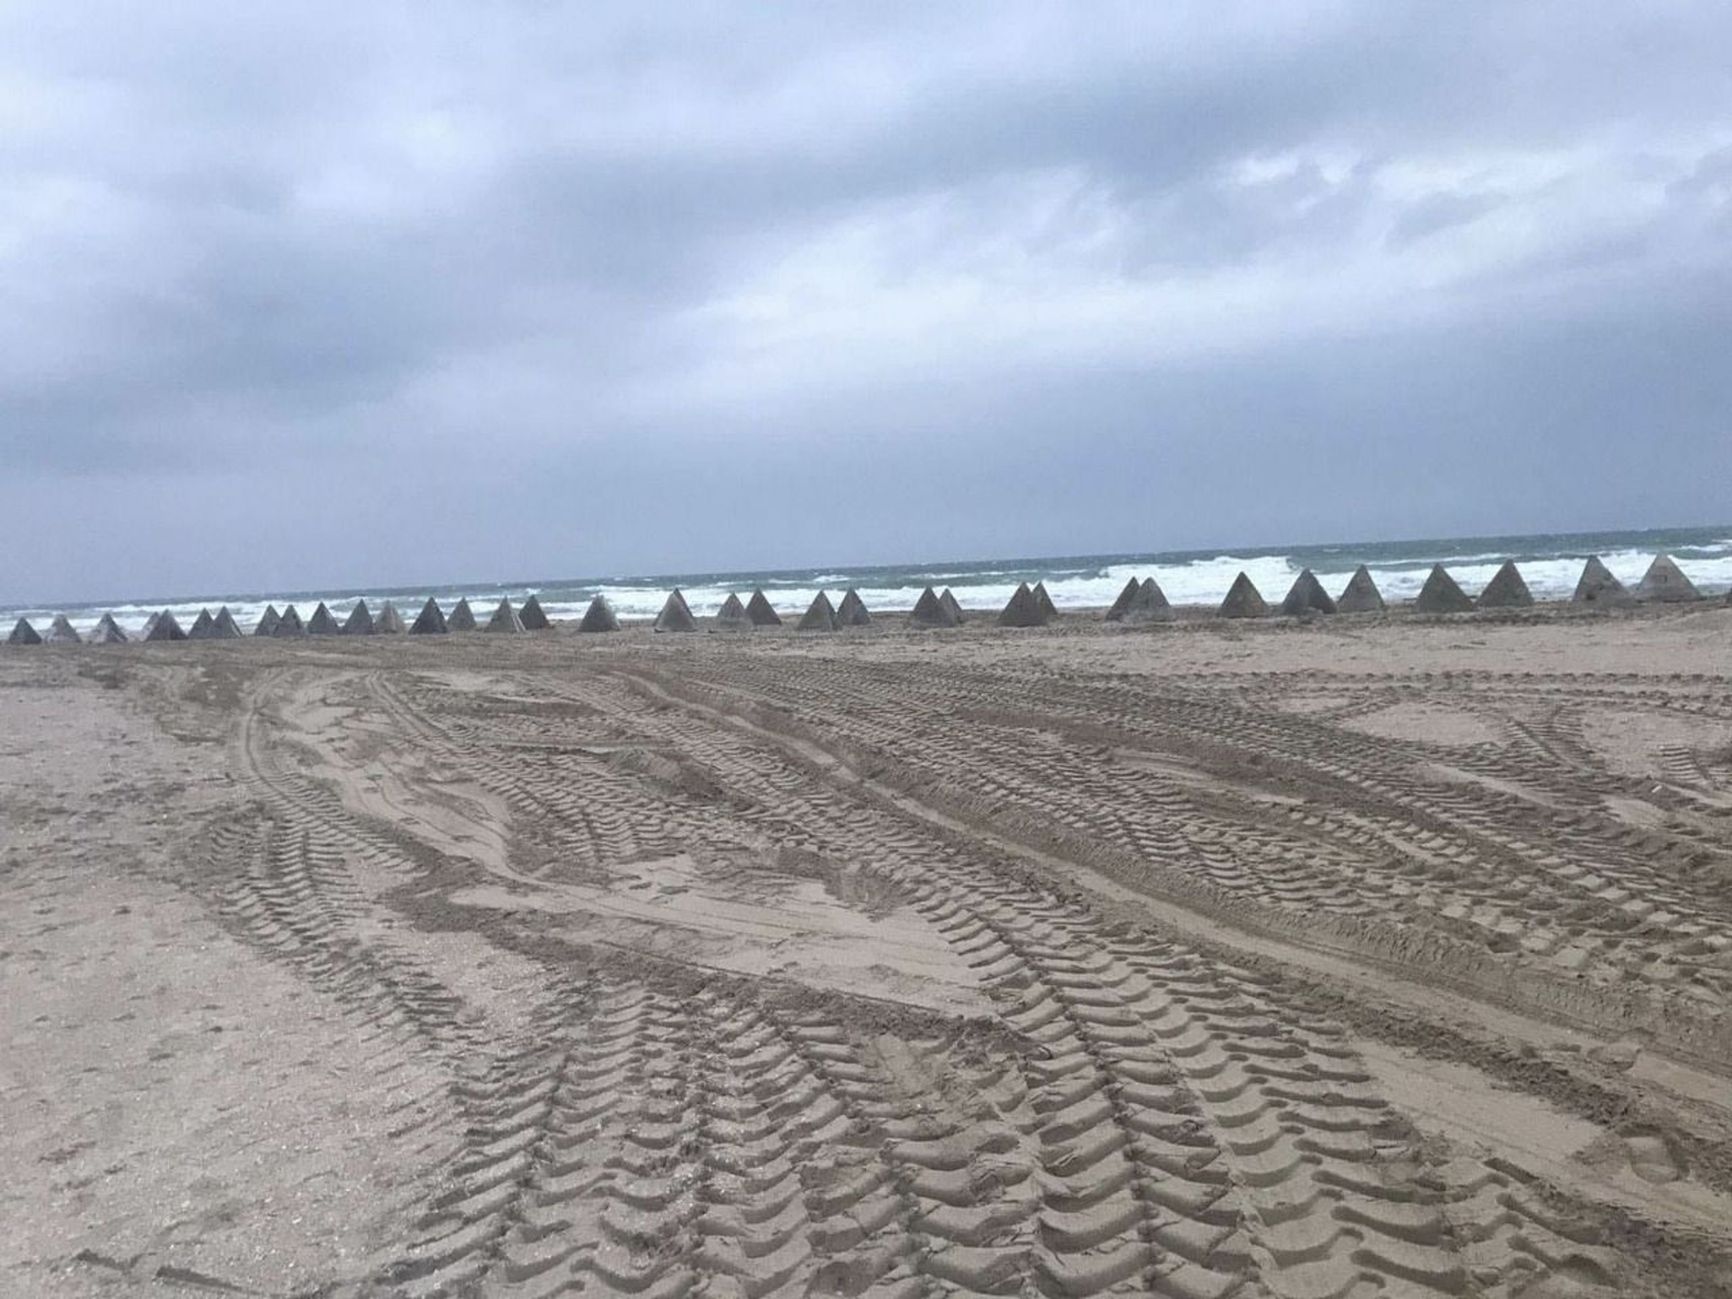 Concrete barriers, aka “dragon's teeth”, on one of the Crimean beaches